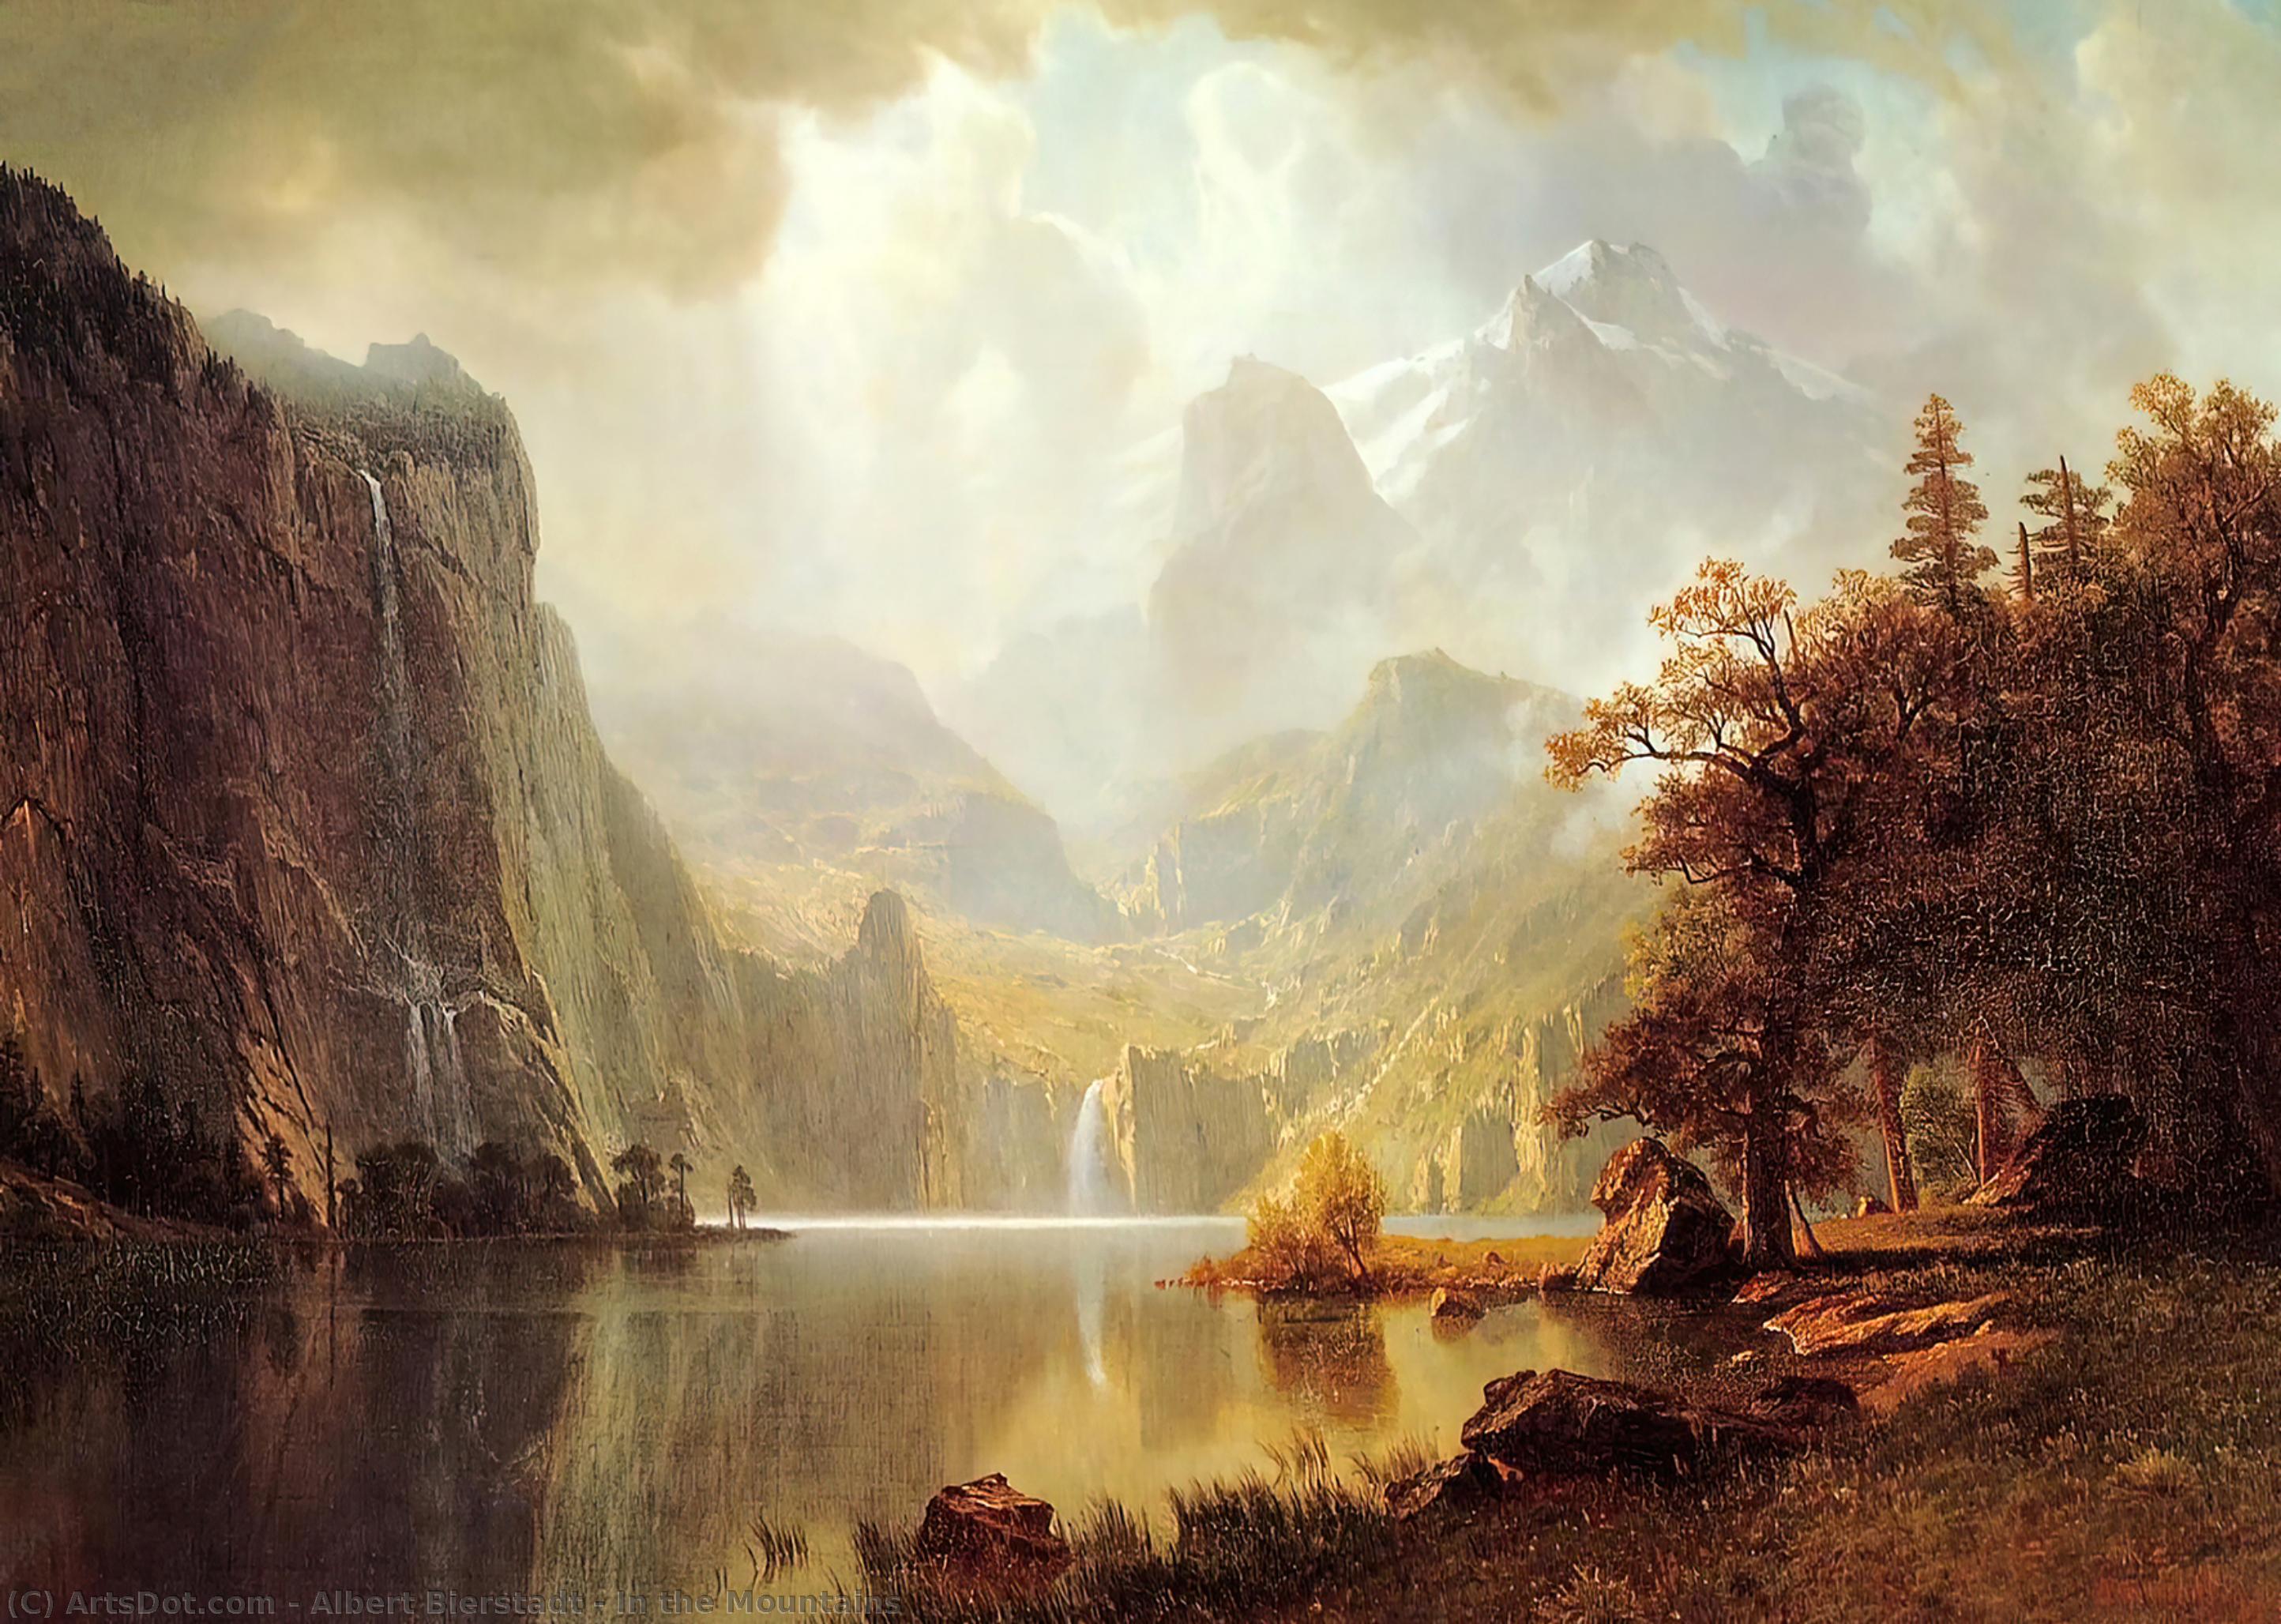 Художники больших картин. Альберт Бирштадт. Альберт Бирштадт (Albert Bierstadt; 1830-1902). Альберт Бирштадт картины. Пейзаж Albert Bierstadt.